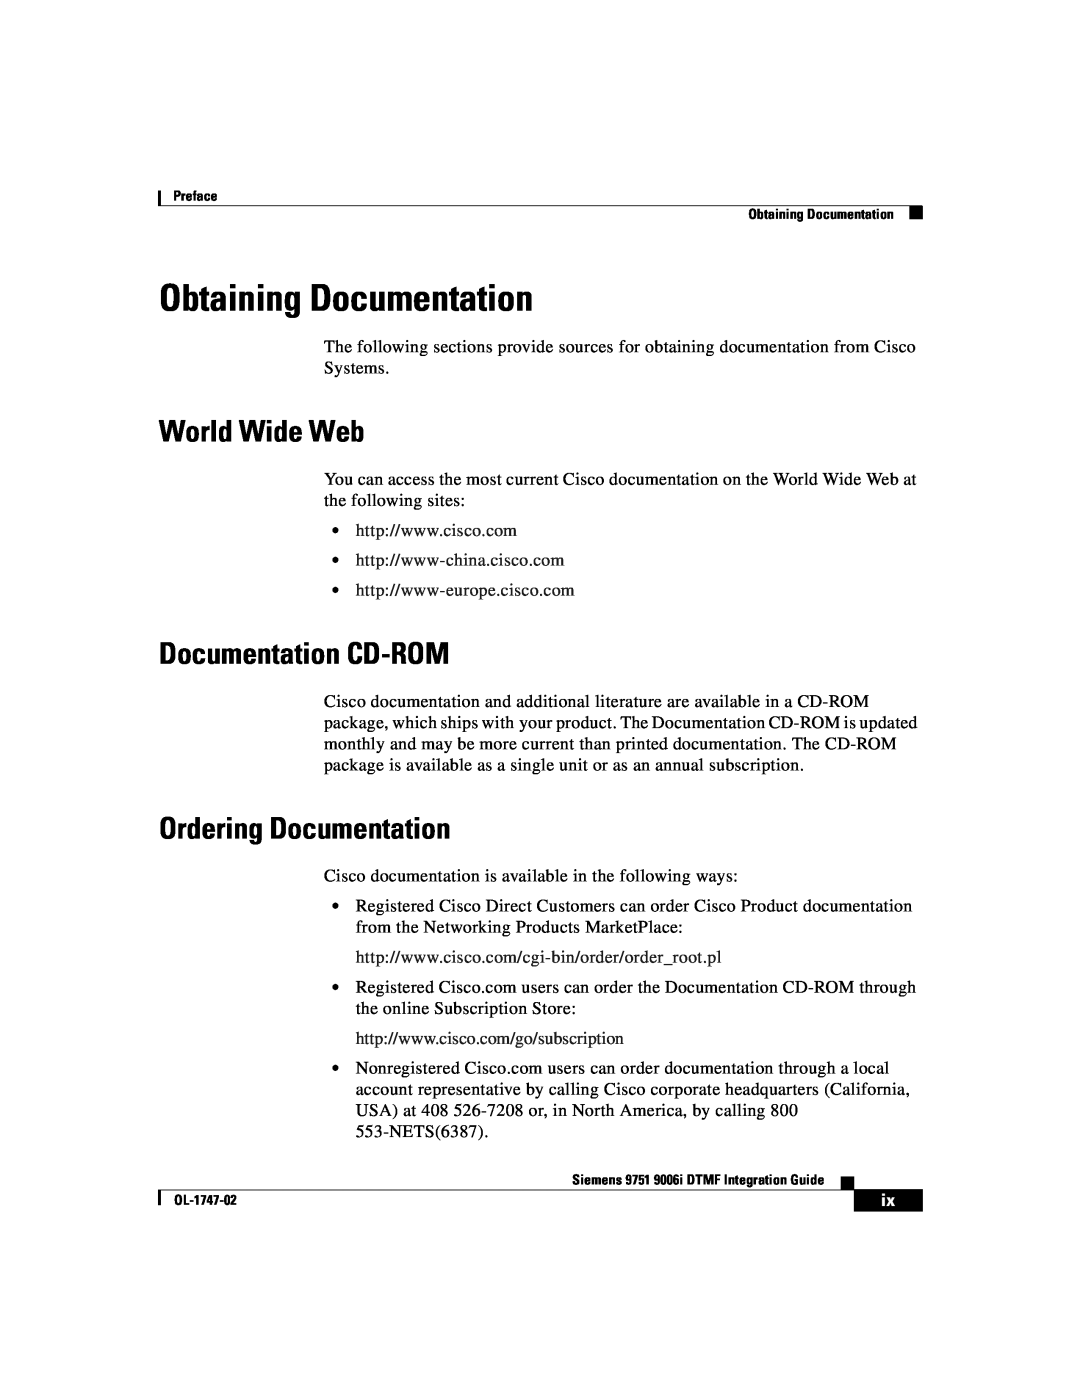 Able Planet OL-1747-02 manual Obtaining Documentation, World Wide Web, Documentation CD-ROM, Ordering Documentation 